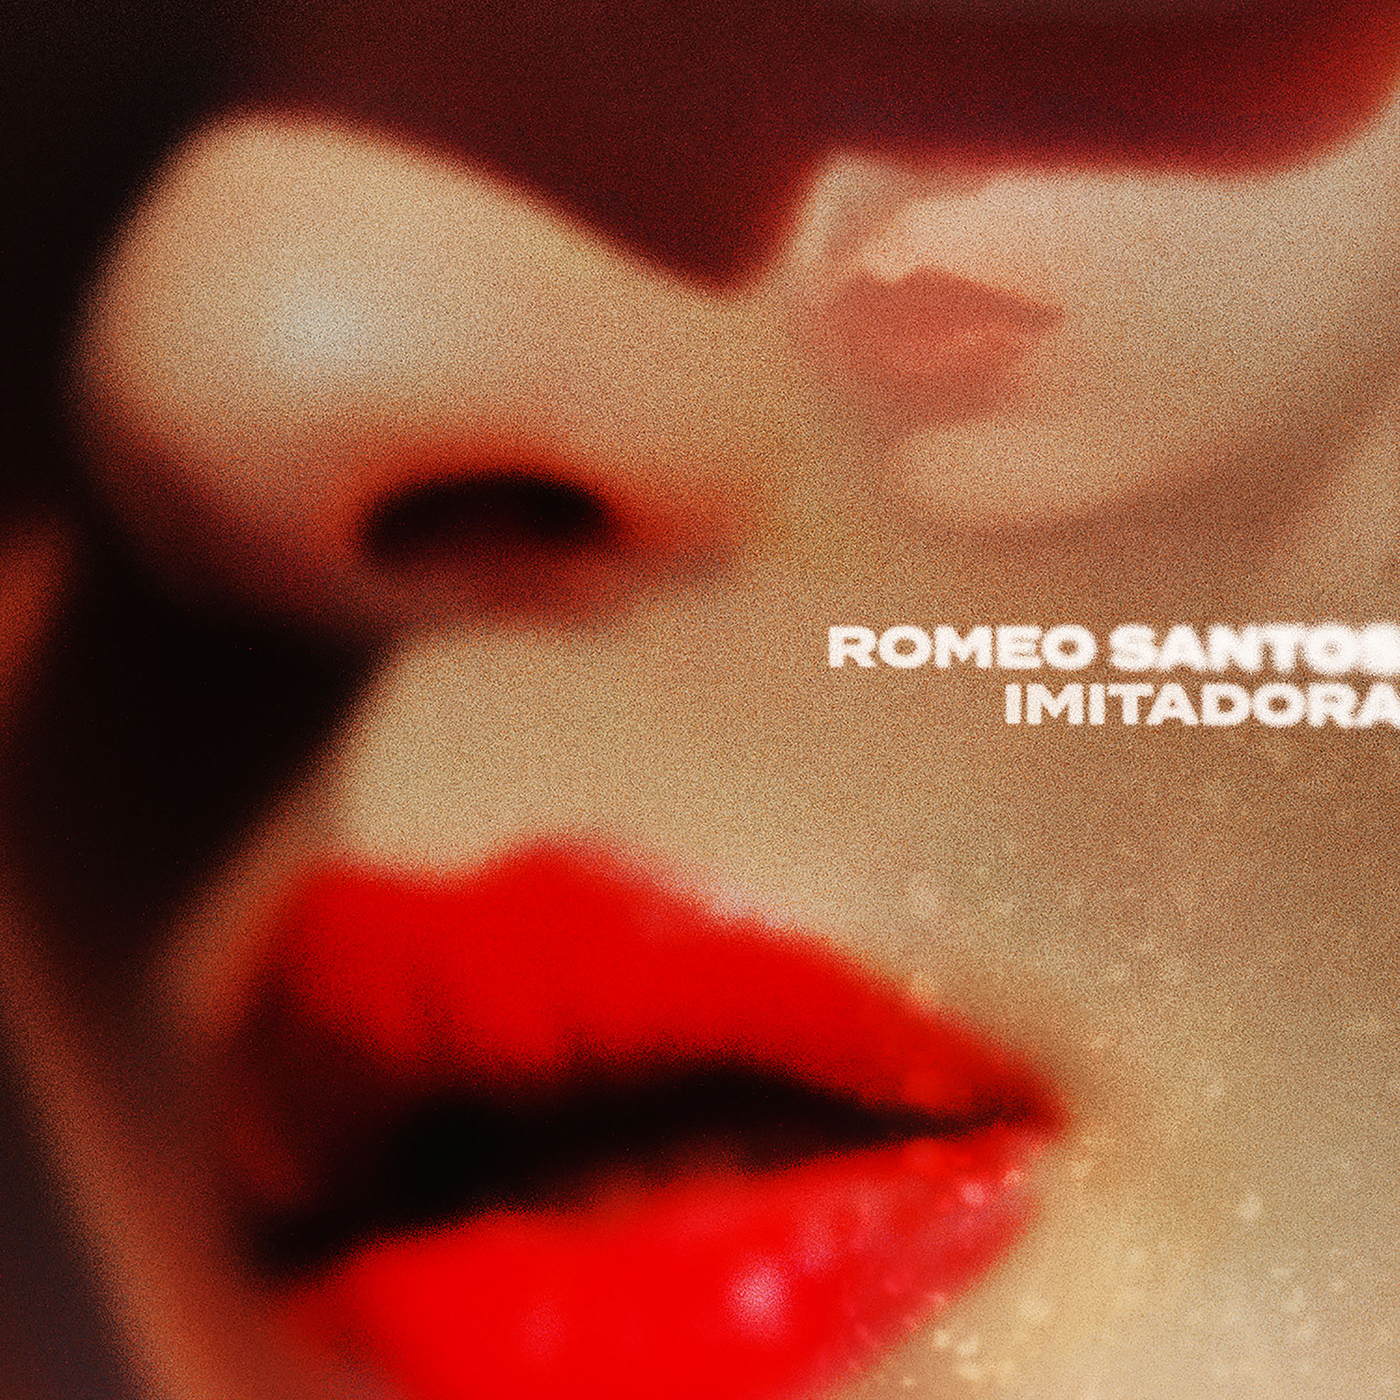 Romero Santos - Imitadora